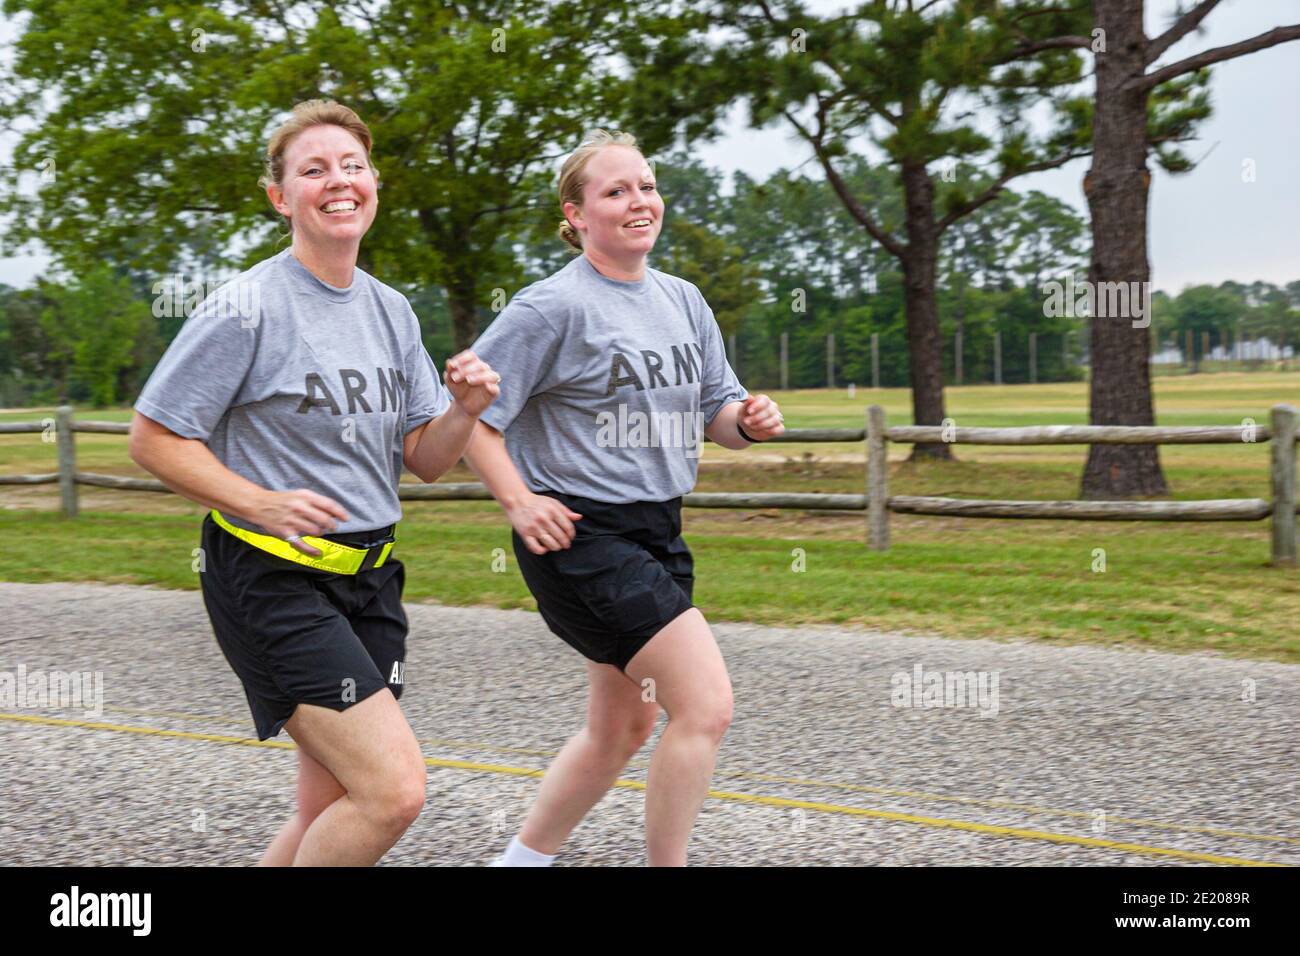 Alabama Mobile Brookley Center Army National Guard, Physical Training Program Frau Frauen, Jogger, Stockfoto